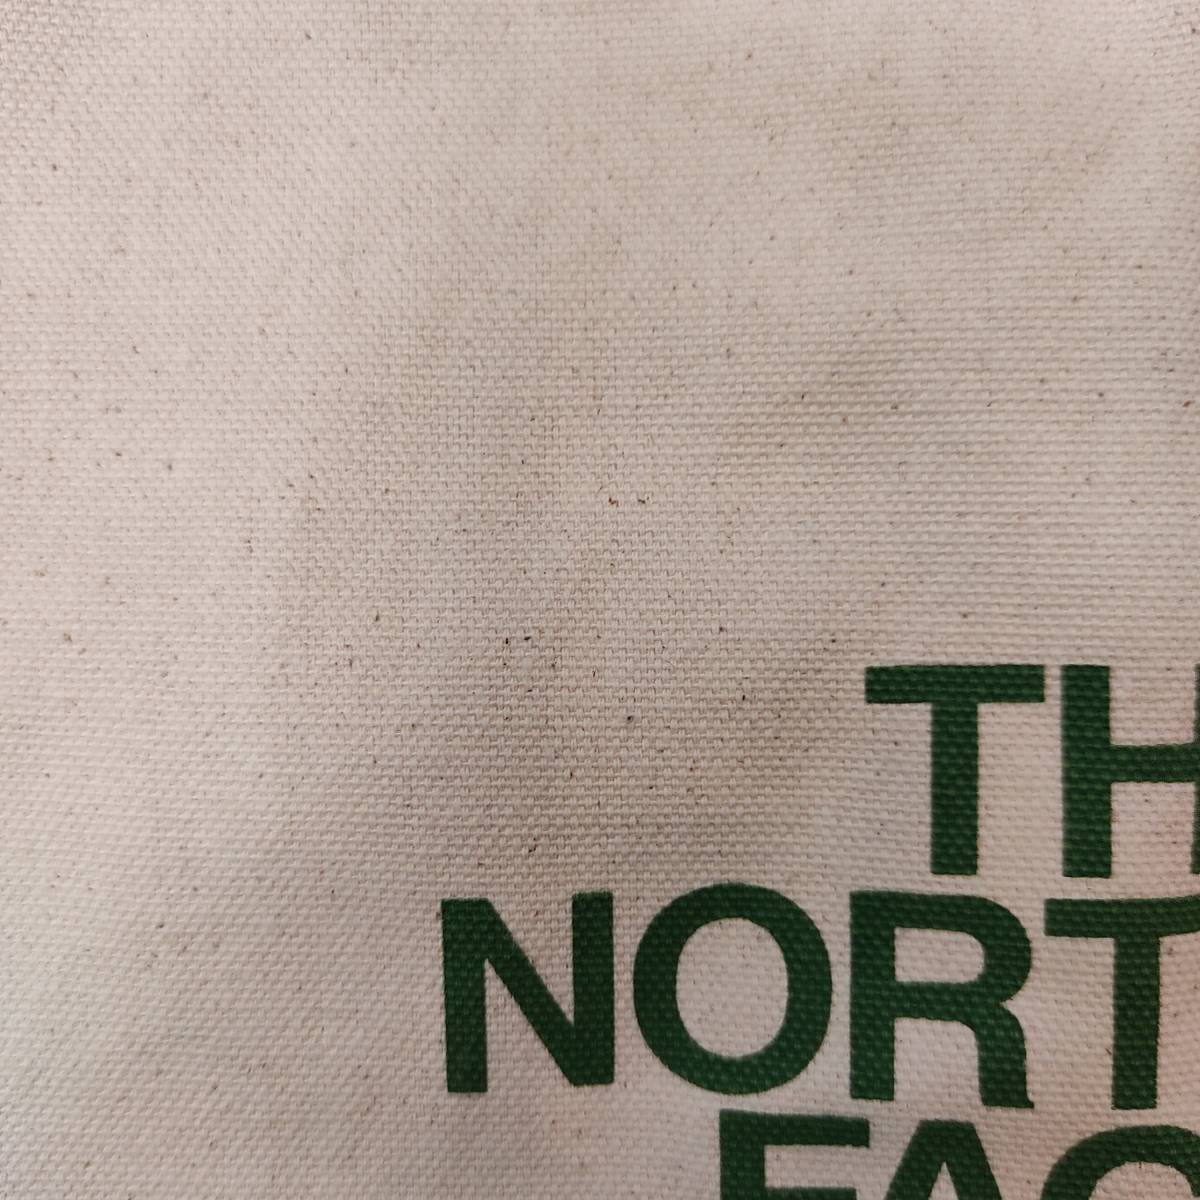  unused tag attaching The North Face North Face shoulder bag shoulder size 10Lmyu Z bag 